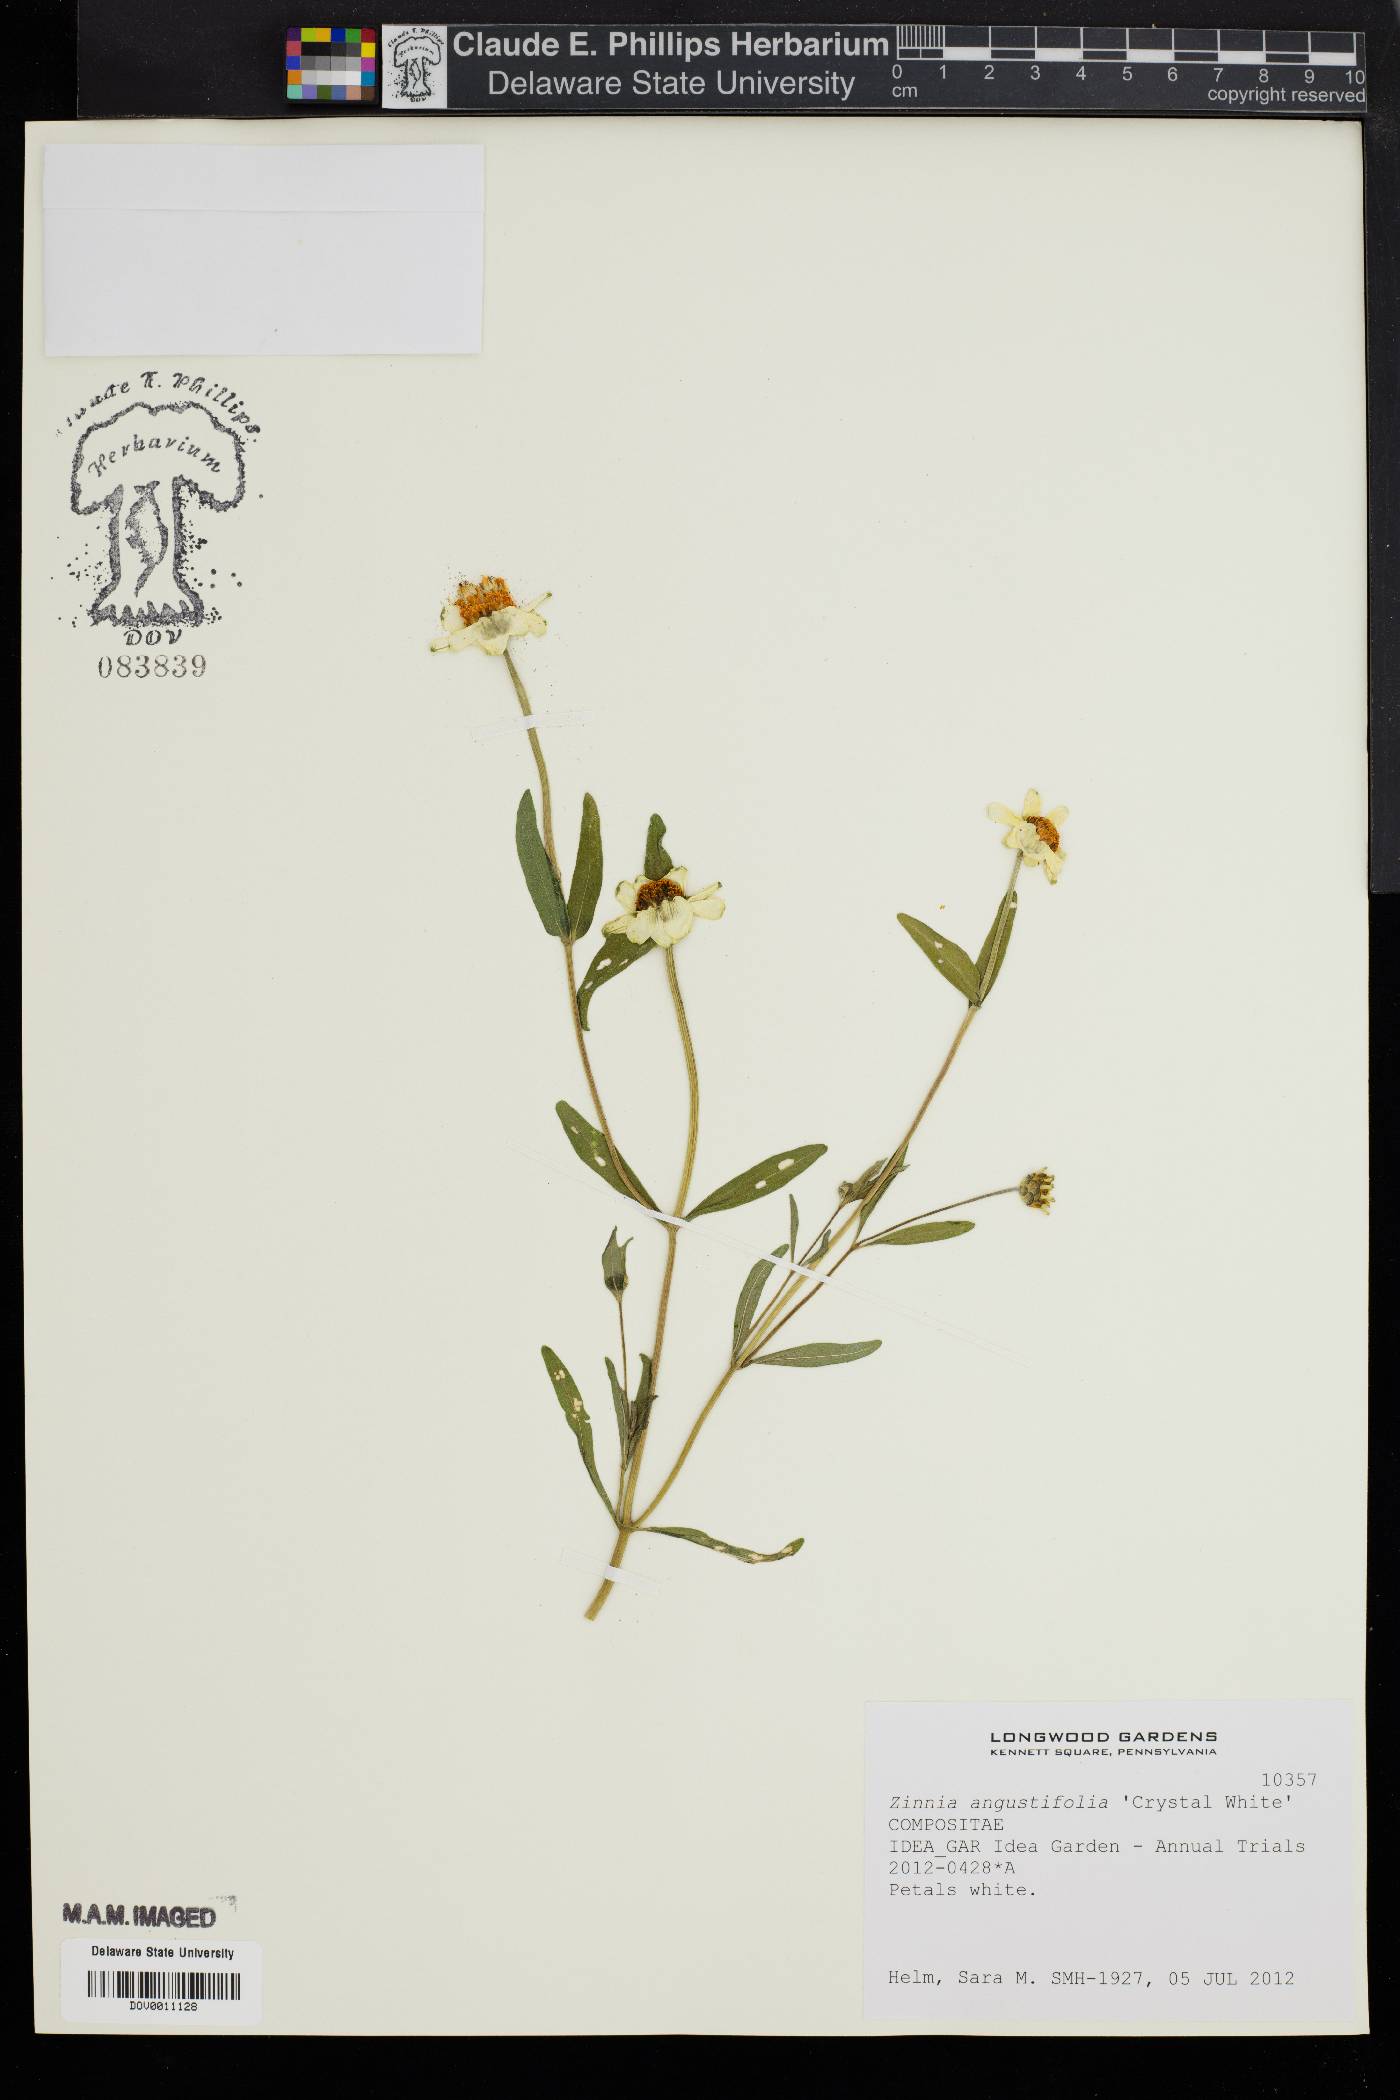 Zinnia angustifolia image